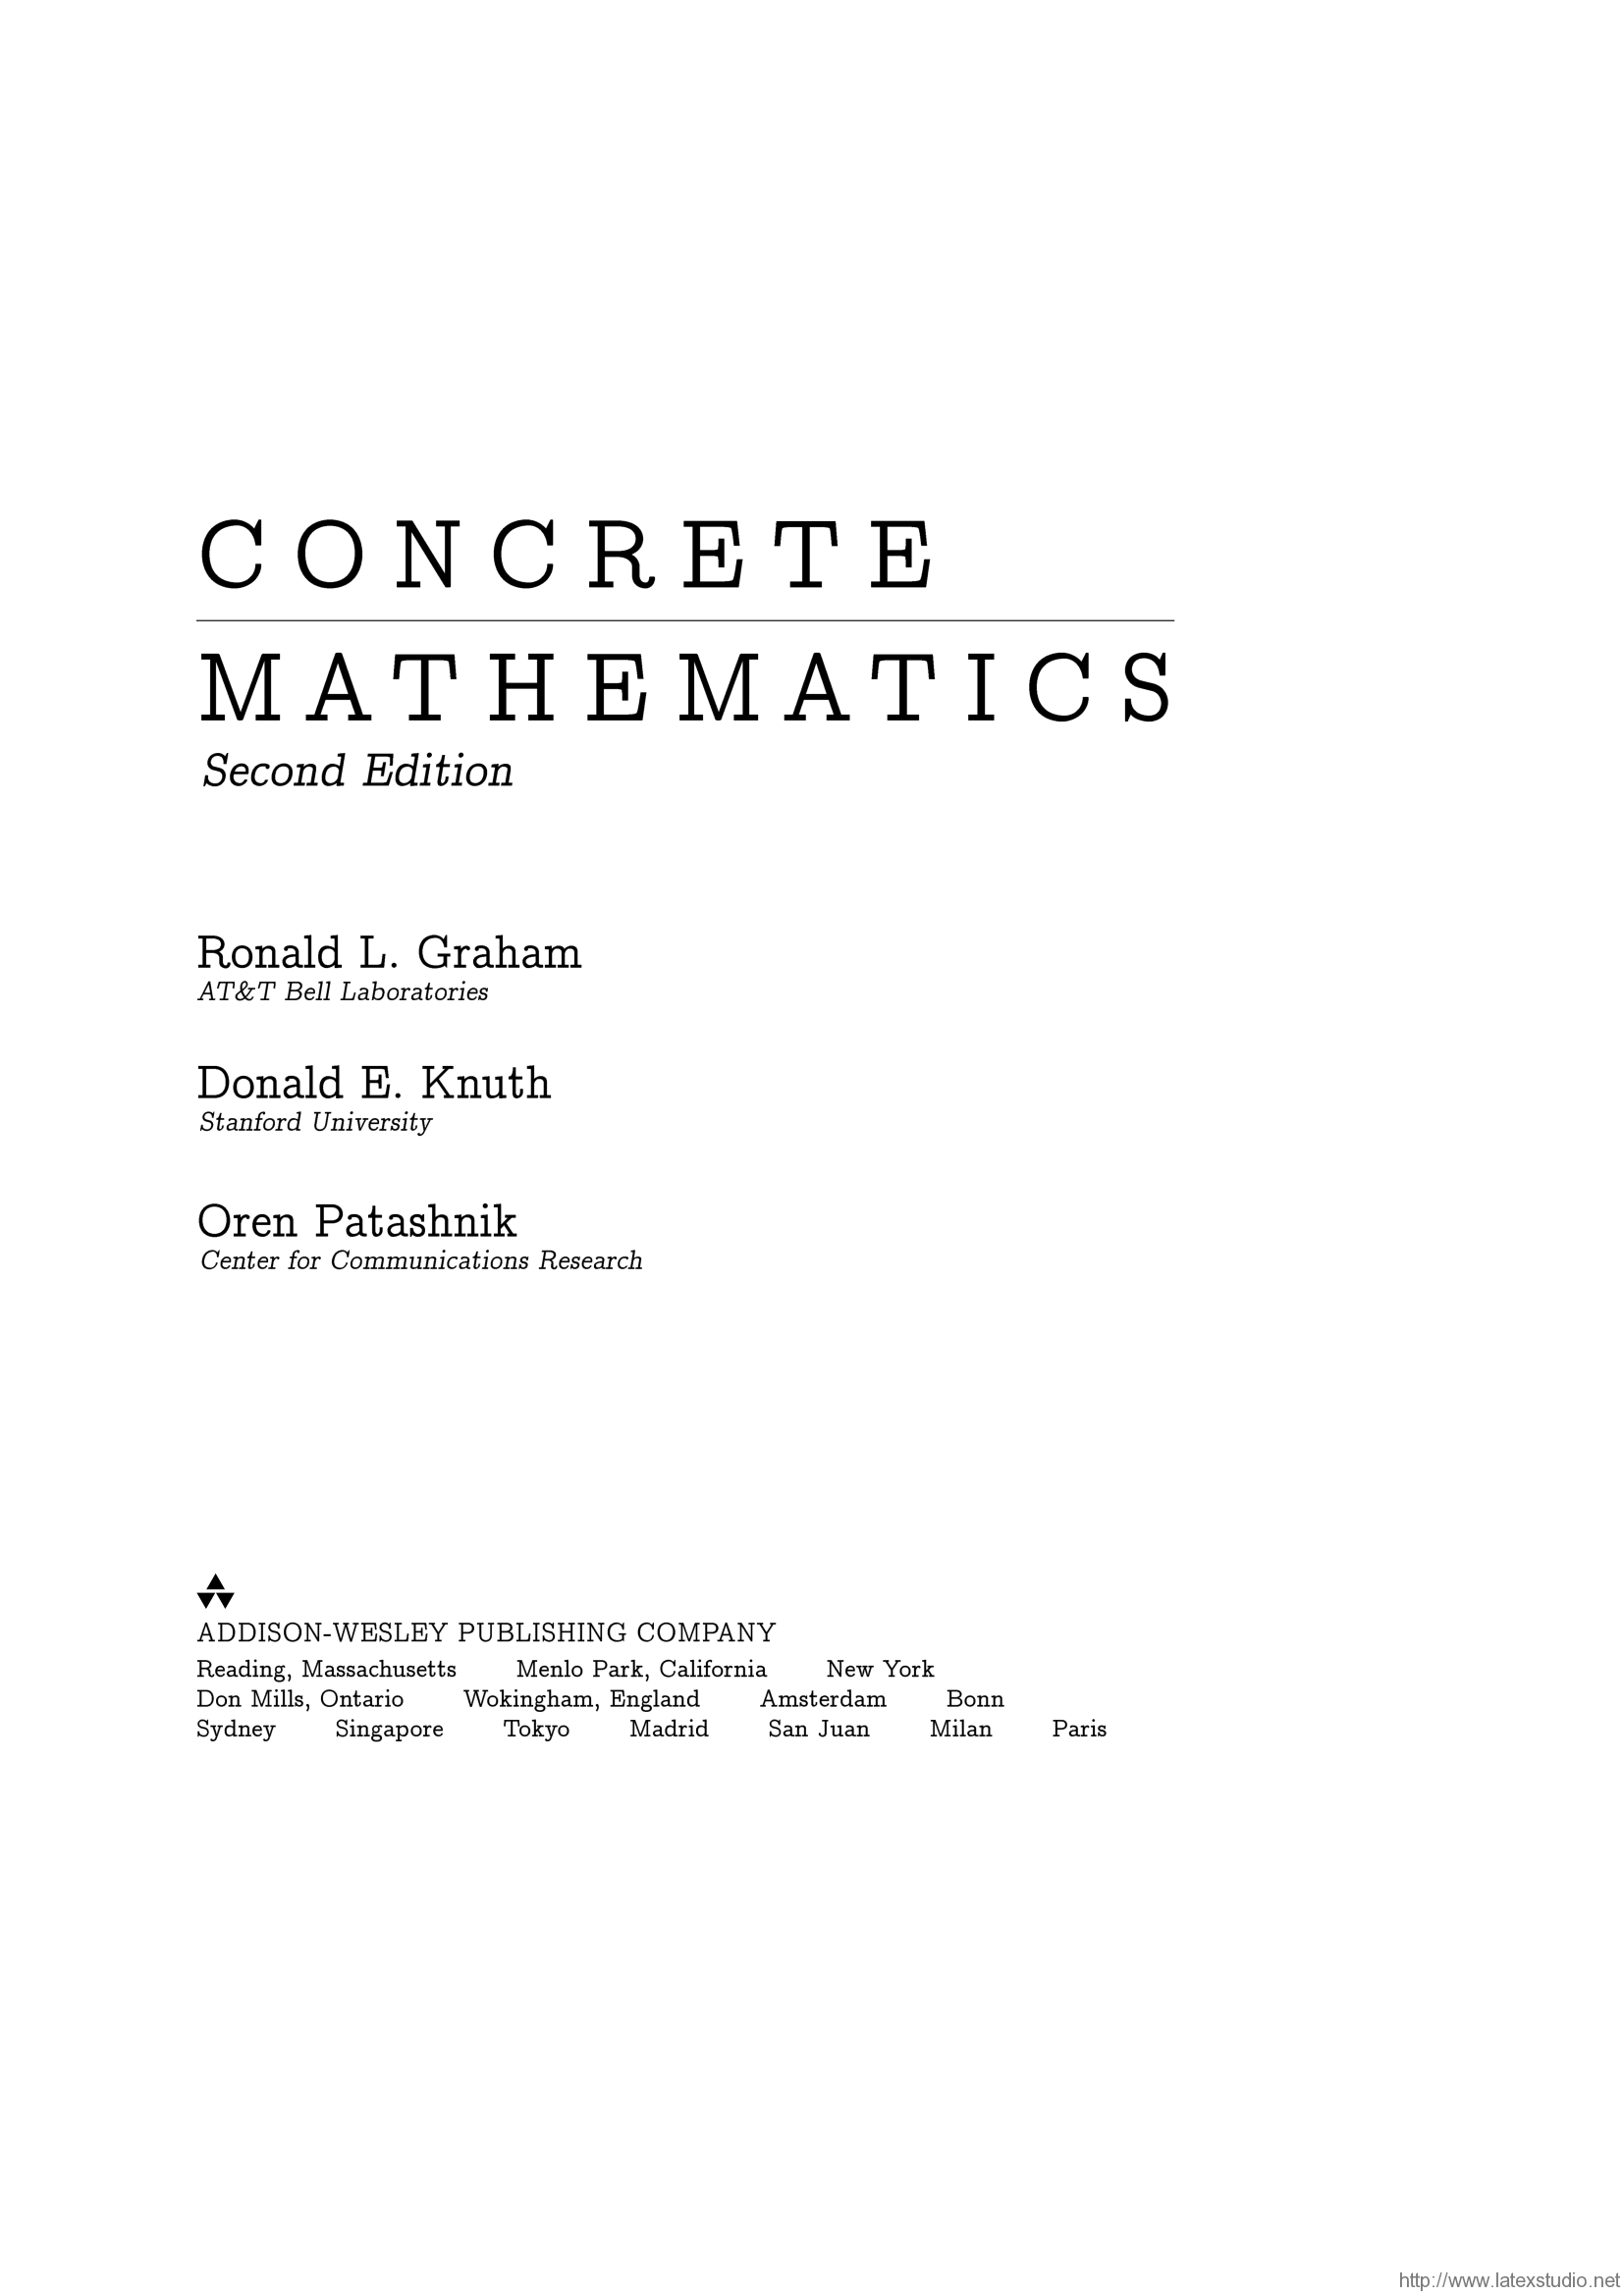 concrete_mathematics_front